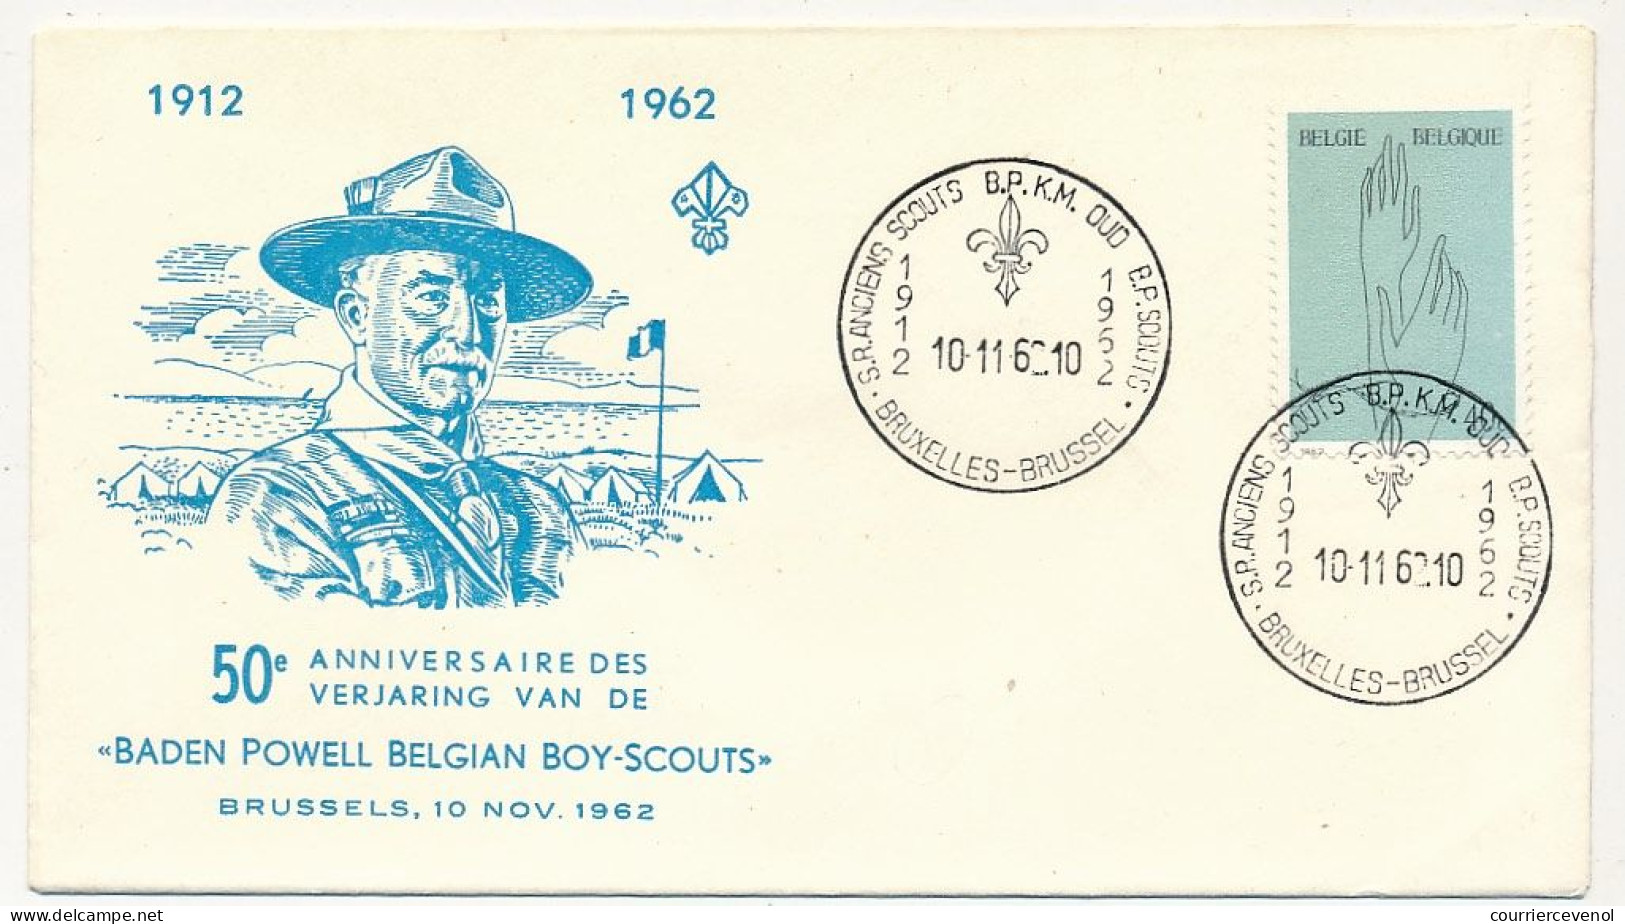 BELGIQUE - Env. FDC 50eme Anniversaire Baden Powell Belgian Boy-Scouts - 10/11/1962 - Briefe U. Dokumente